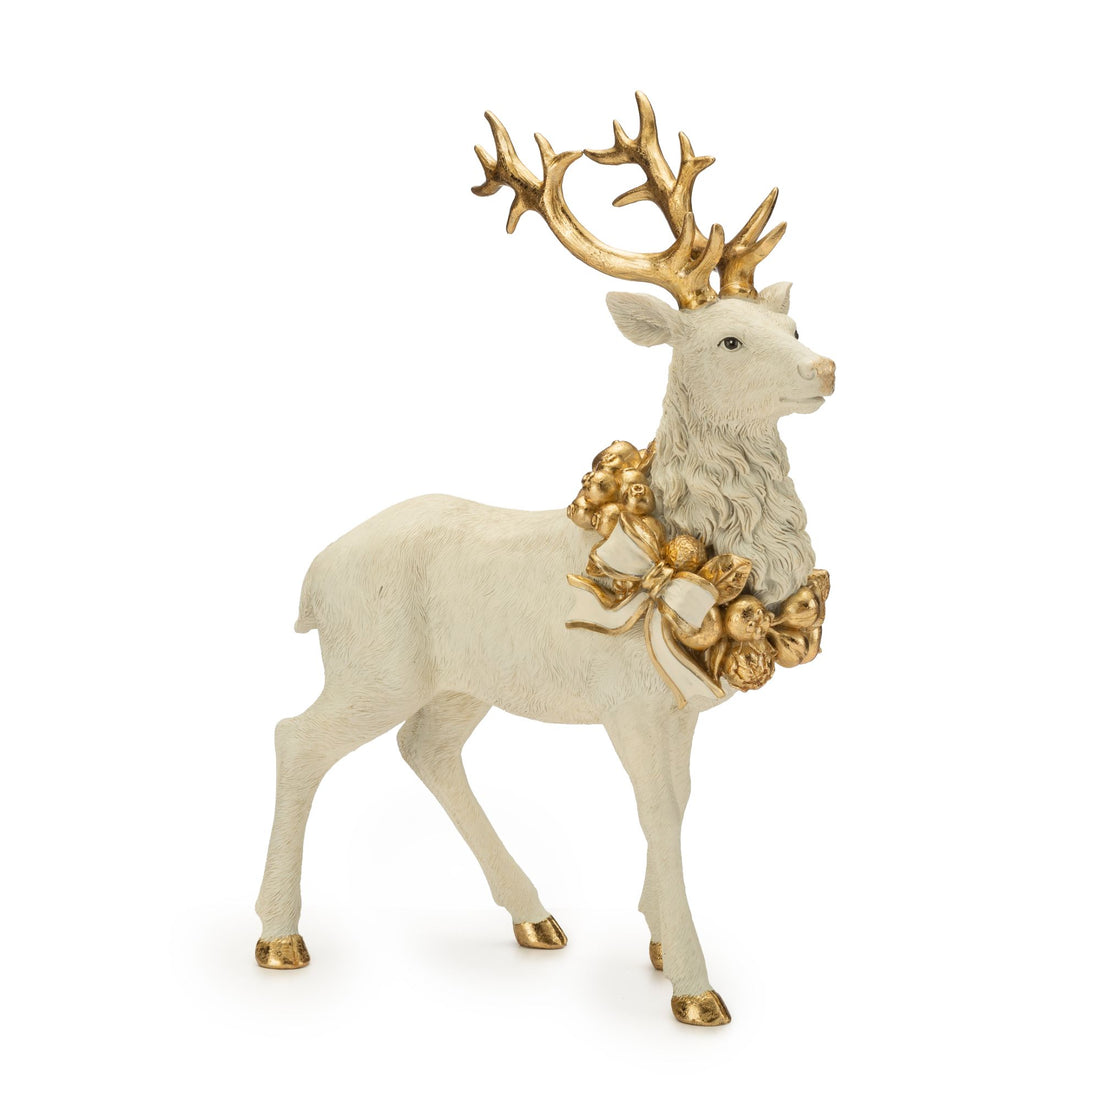 NOEL by Lamart - Renna Resina 32 cm Bianco Oro Decorazione Natale 1022167